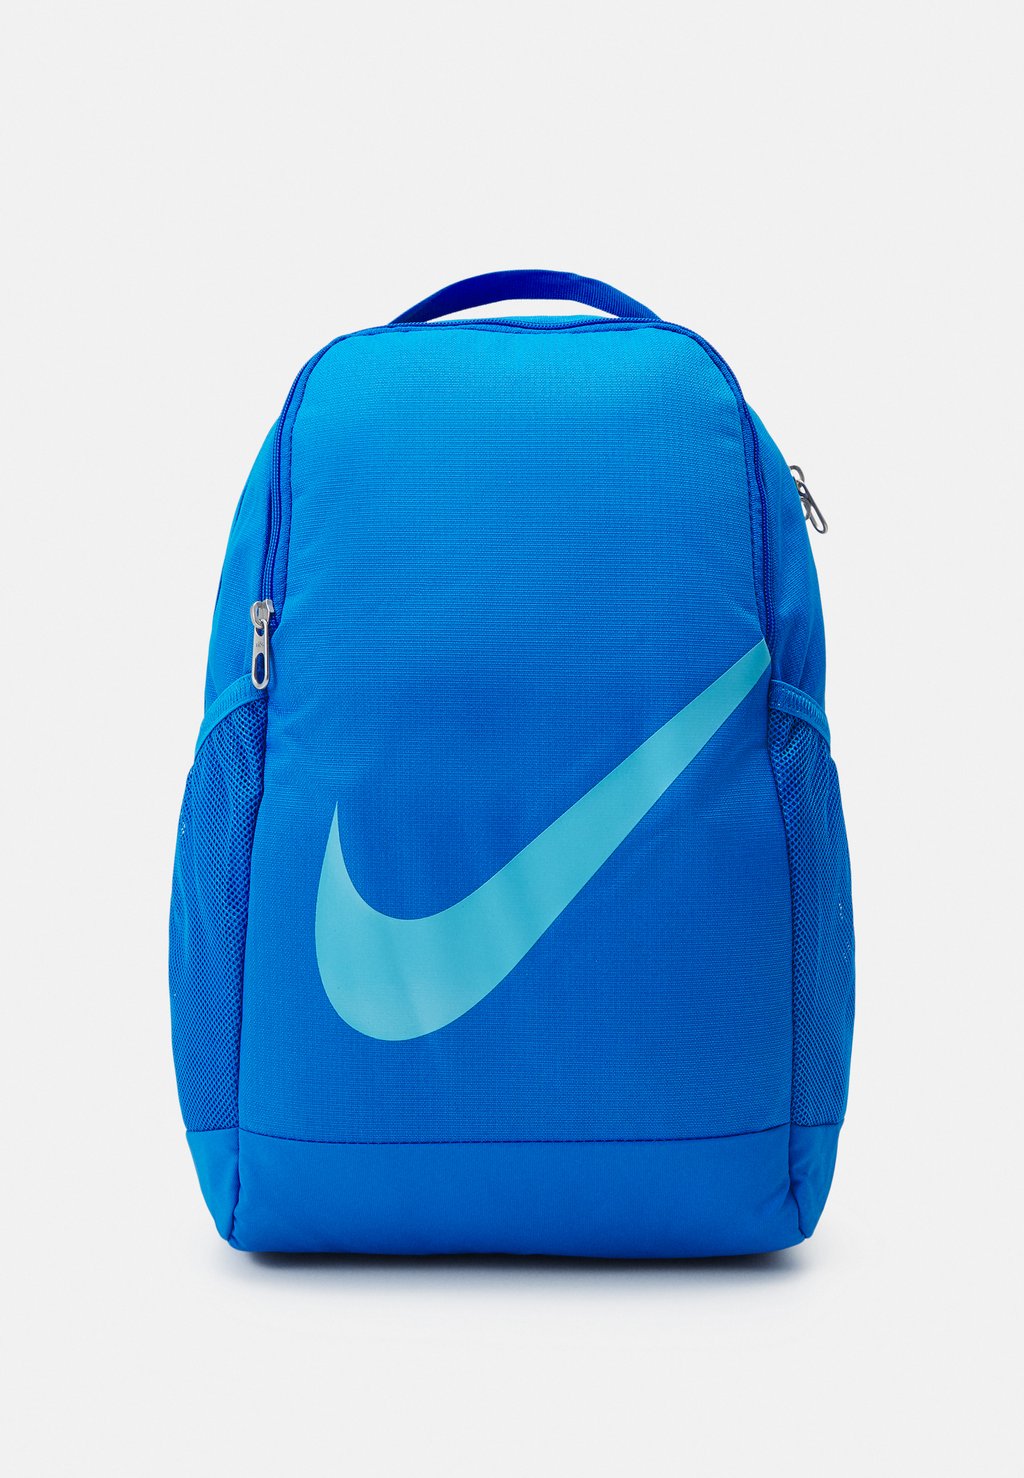 ДЕТСКИЙ РЮКЗАК УНИСЕКС Nike Brasilia Nike blue